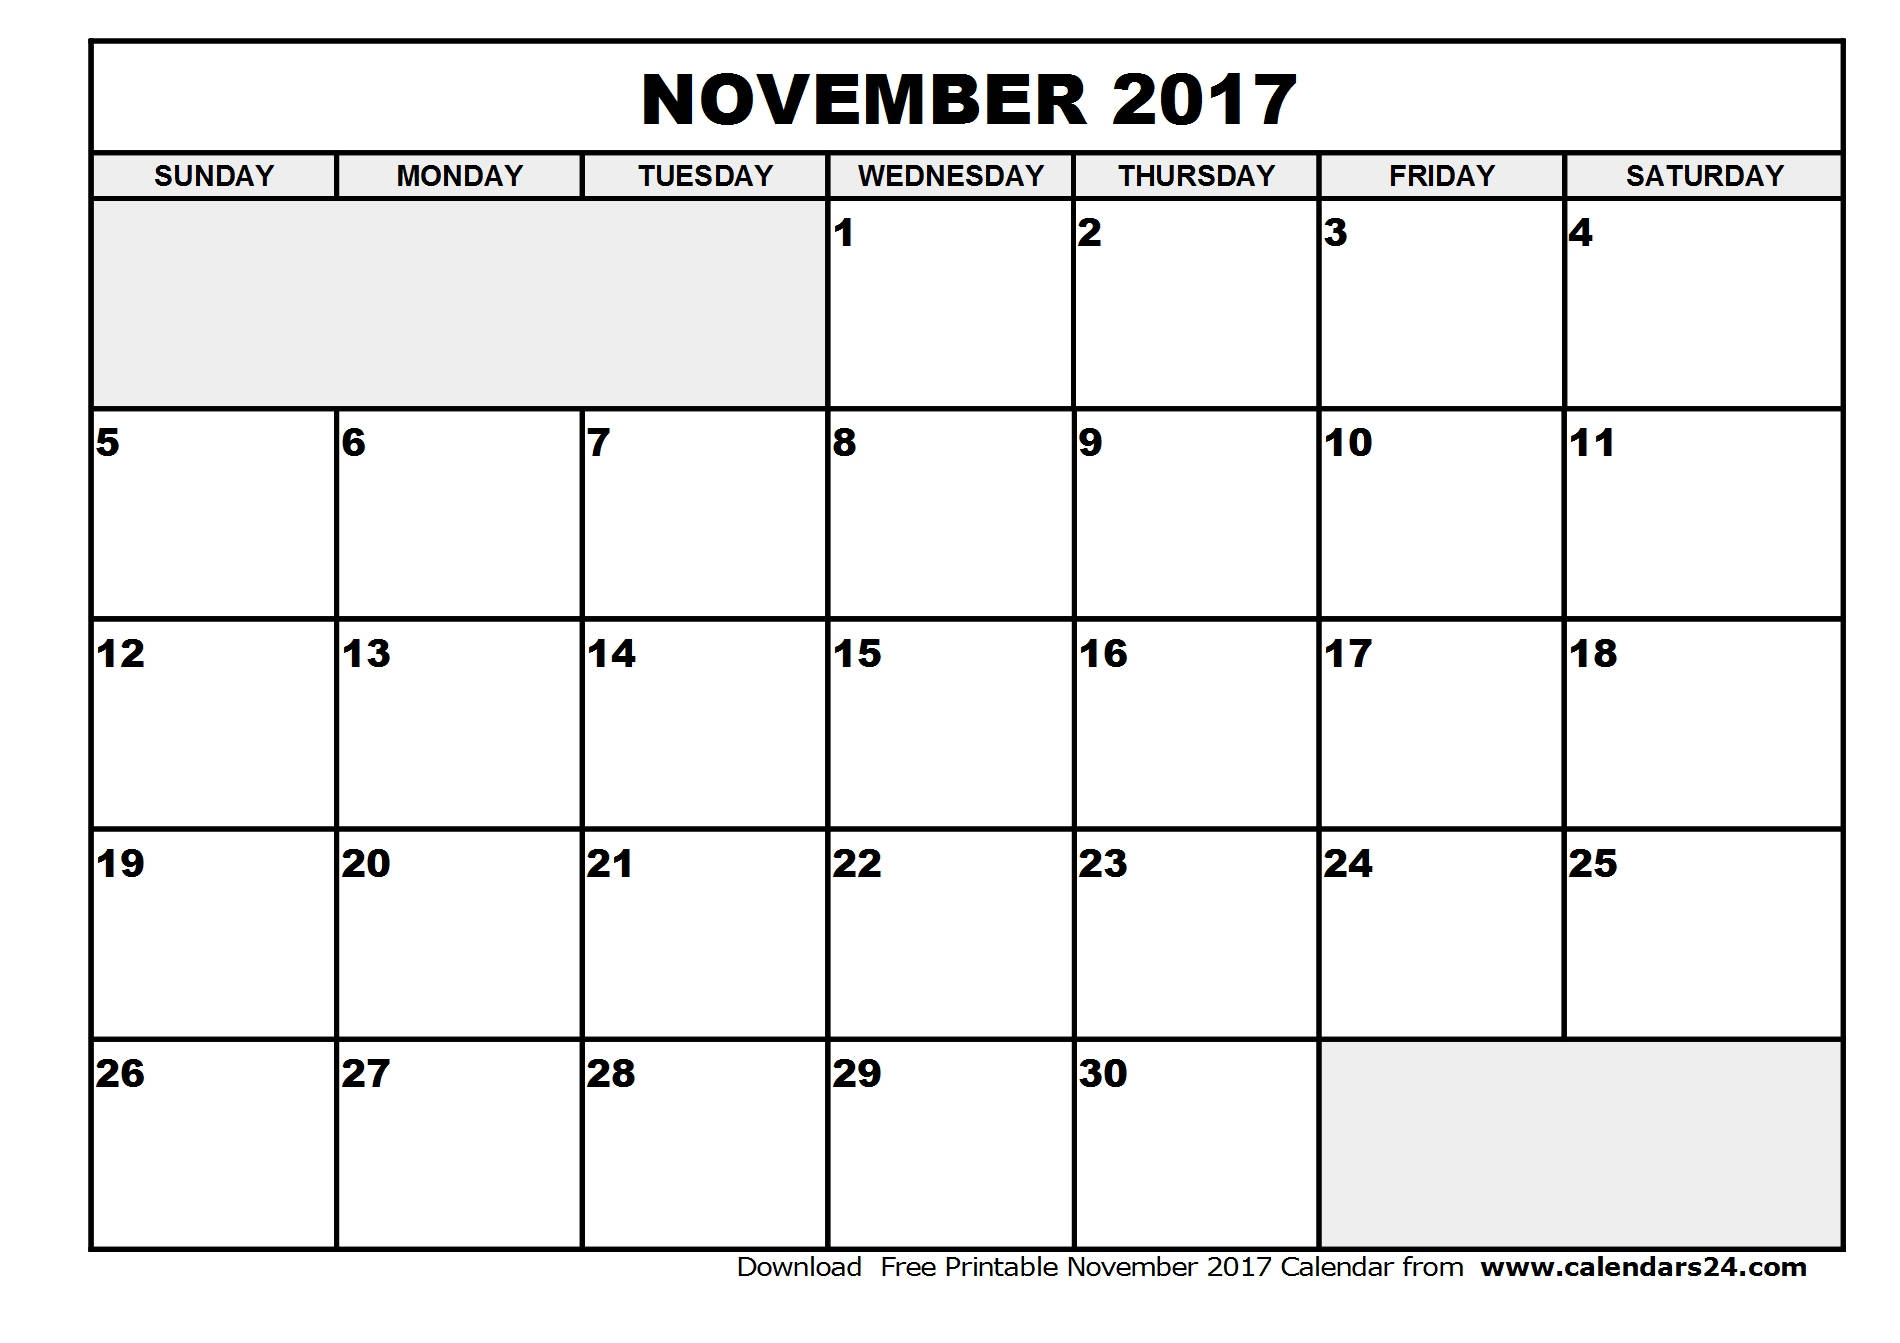 November 2017 Calendar & December 2017 Calendar